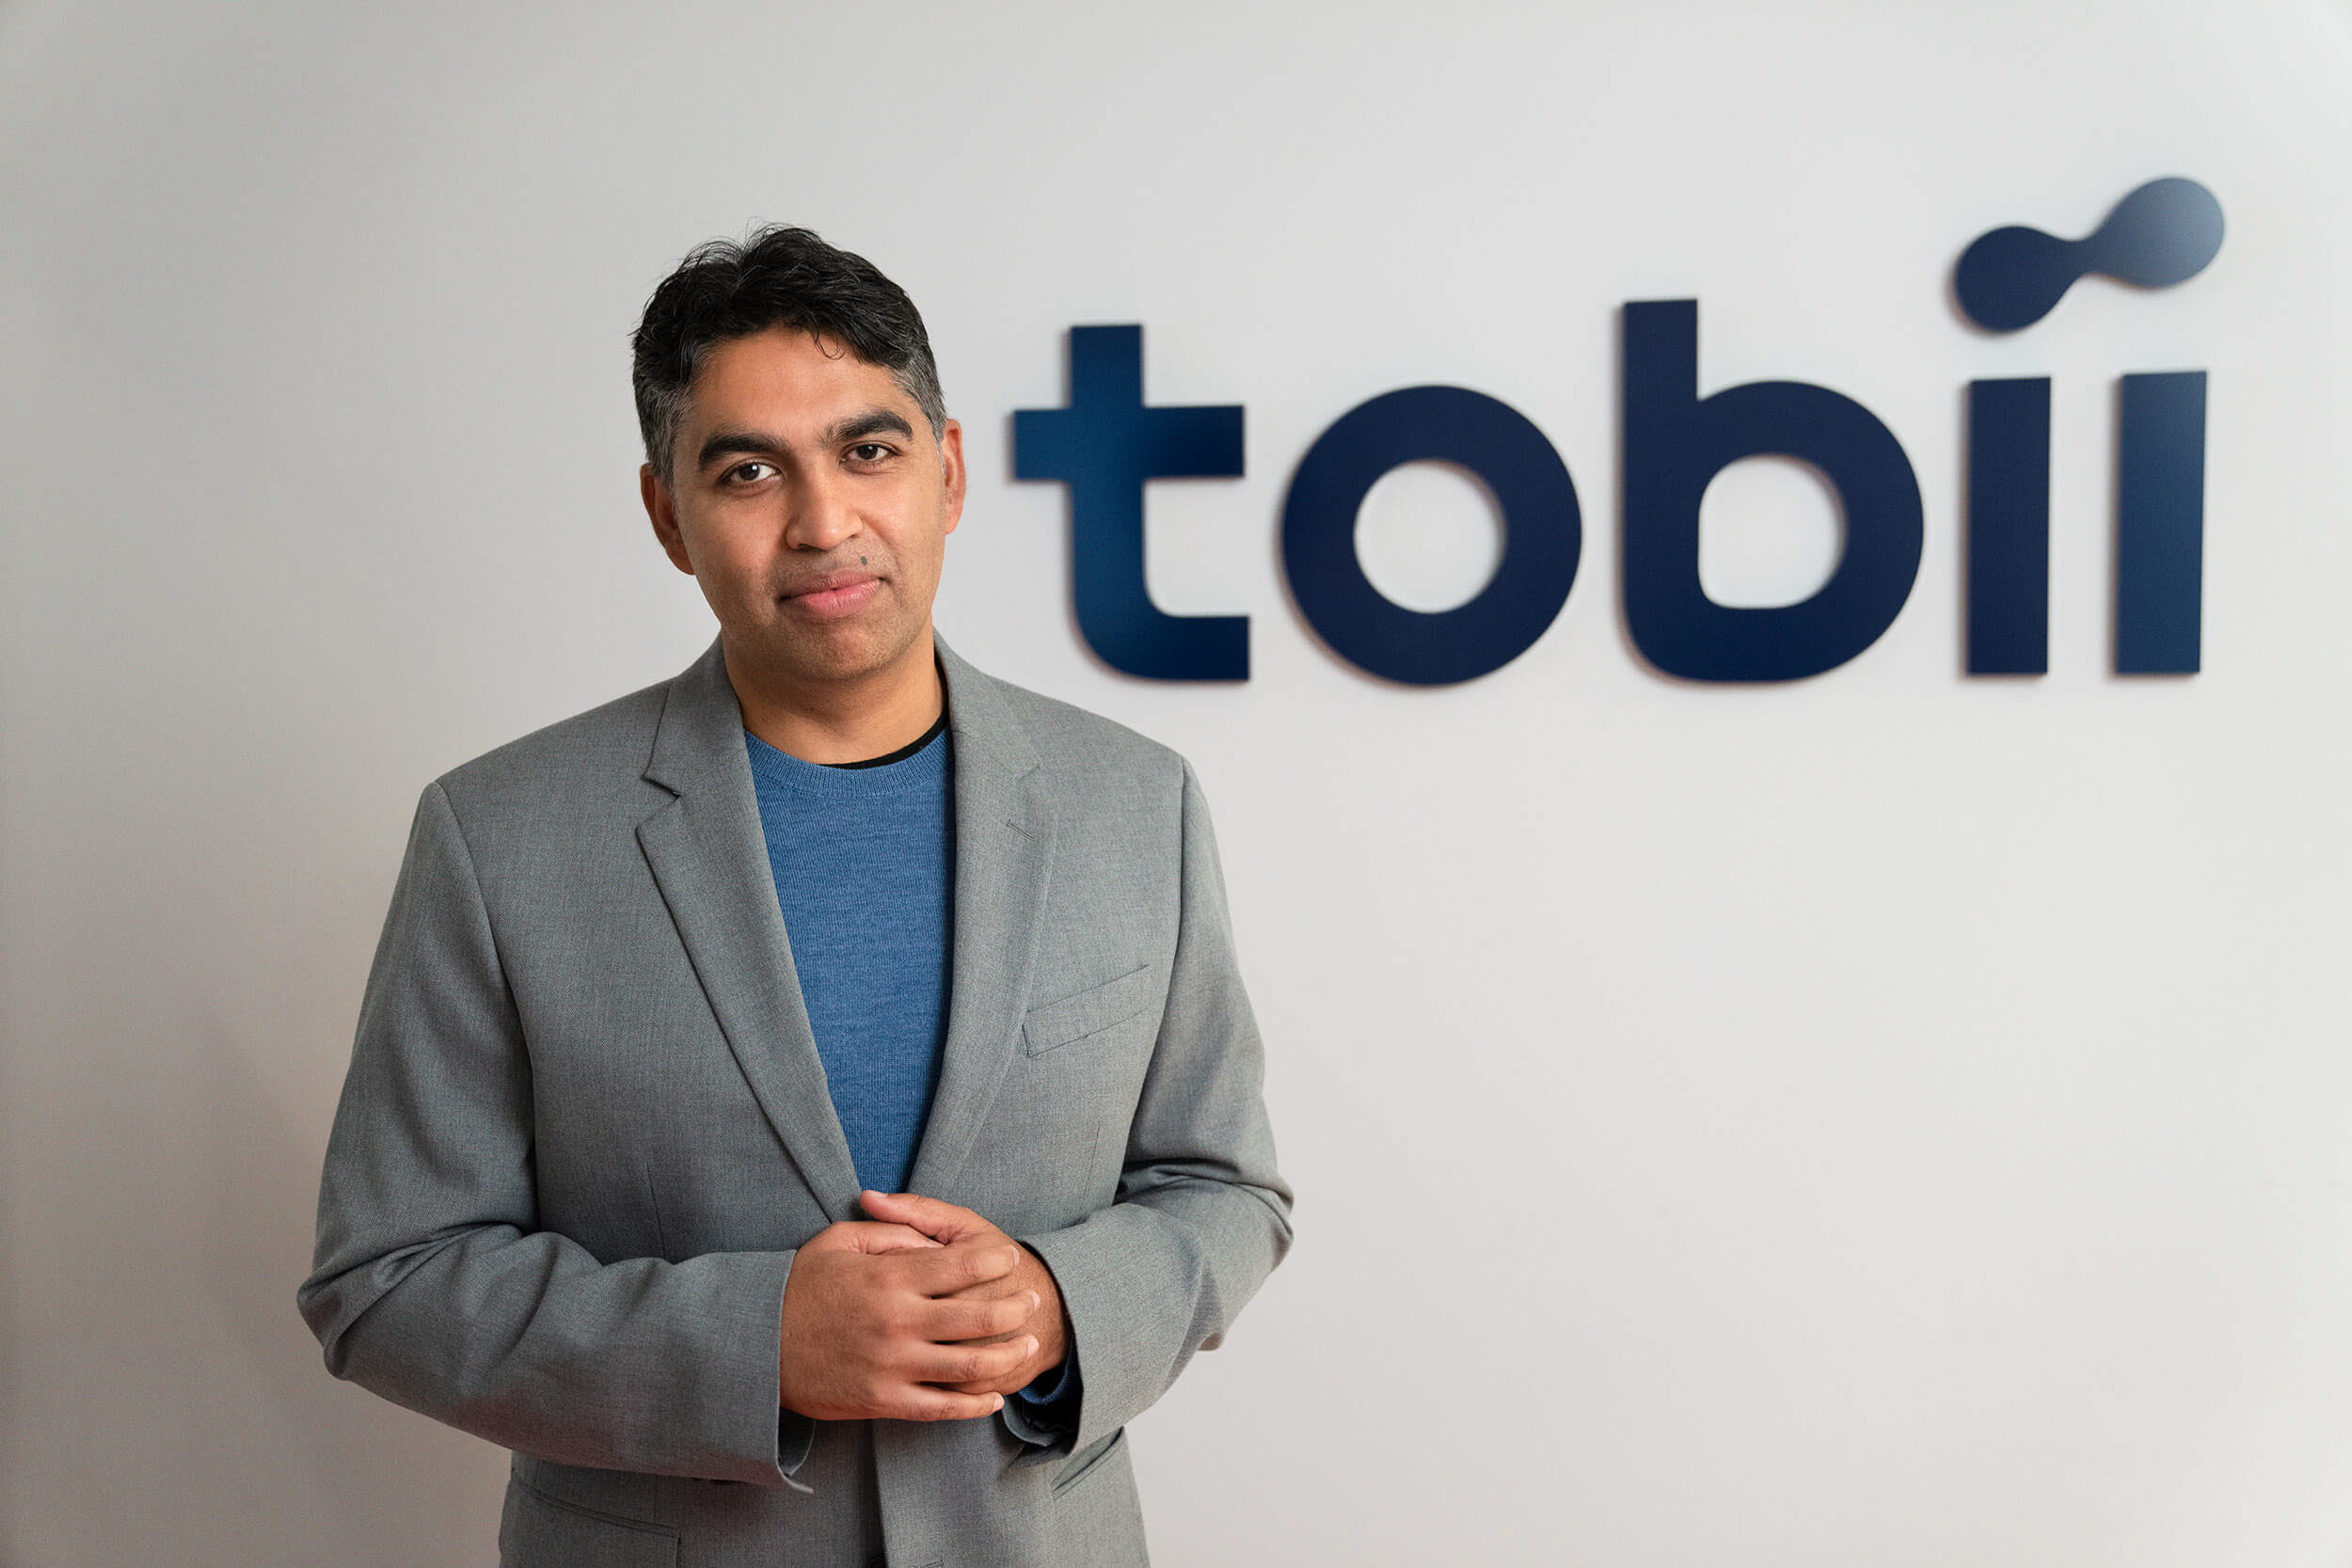 Need an eye tracking image or company logo? - Tobii - Tobii